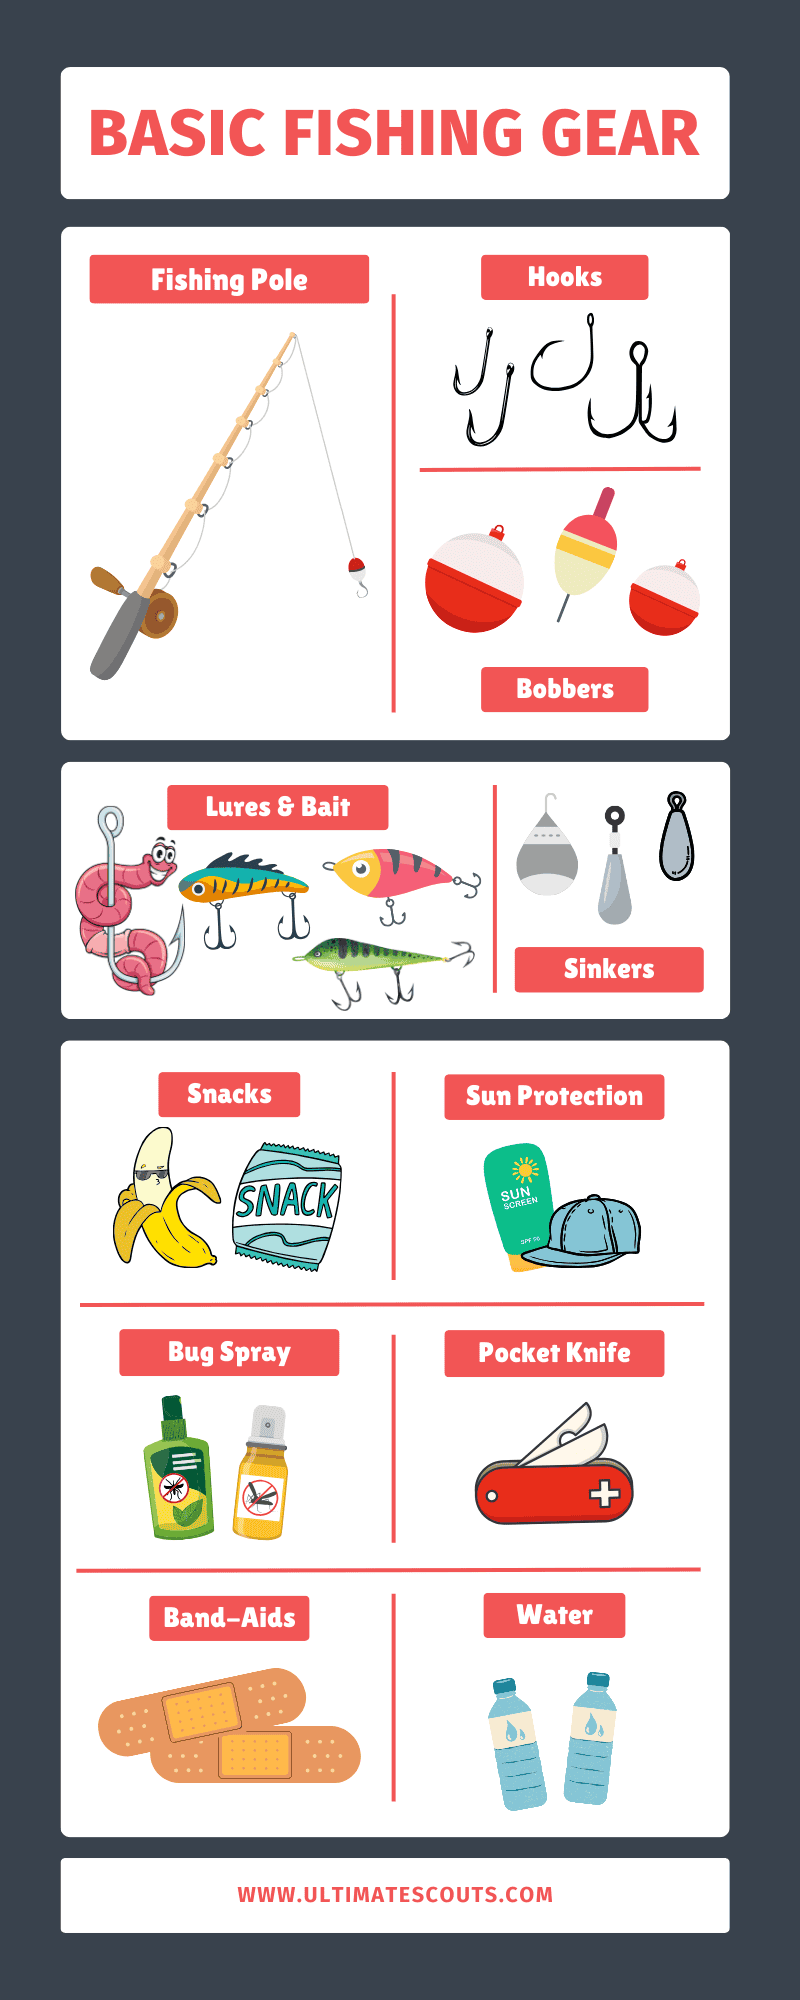 Basic Fishing Gear